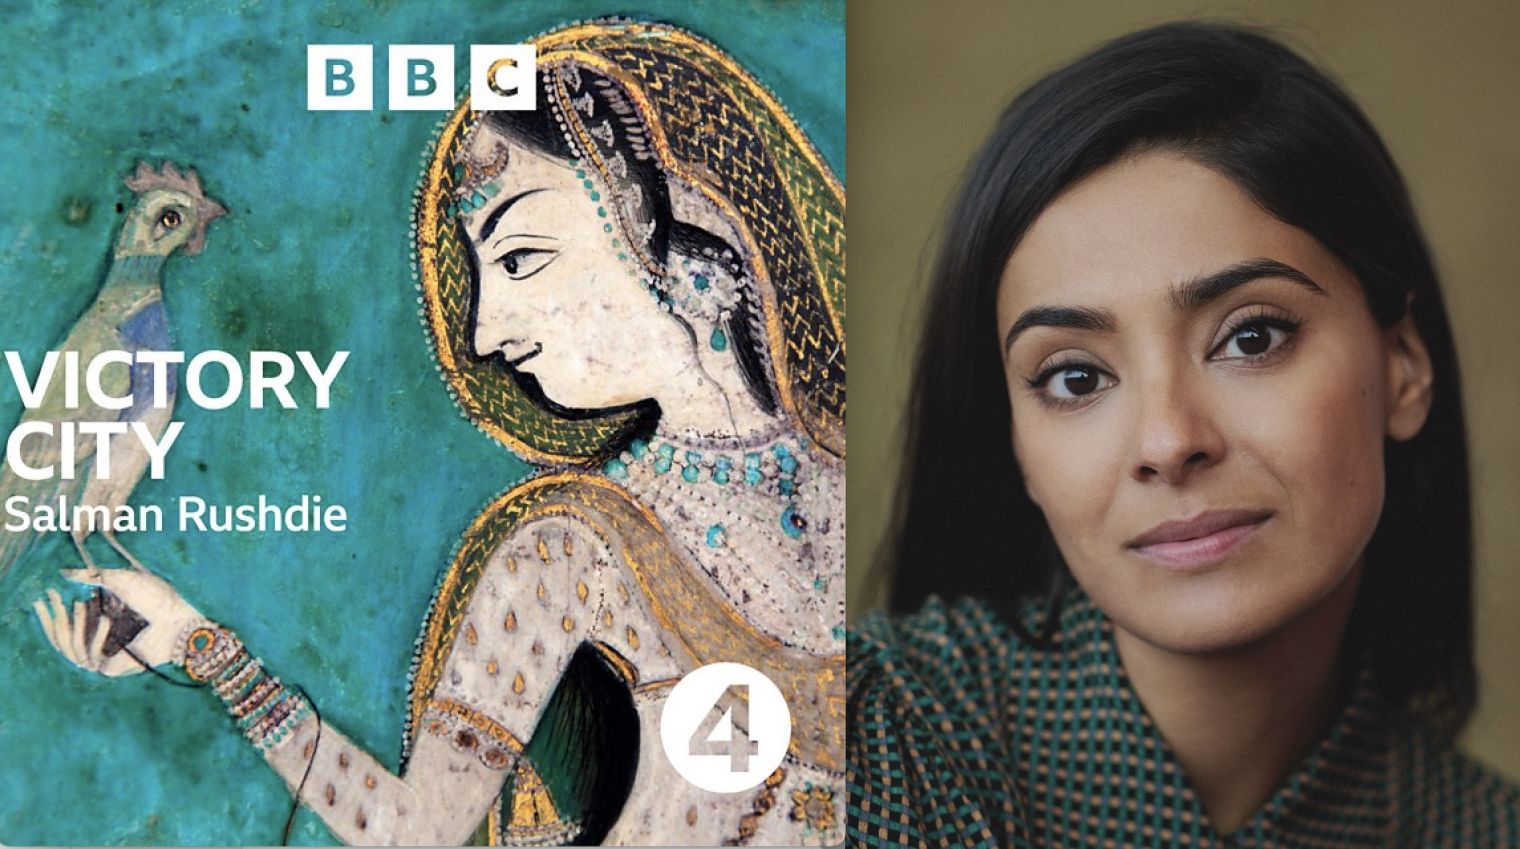 Dinita Gohil narrates Salman Rushdie's latest novel 'Victory City' as part of Radio 4's Books at Bedtime